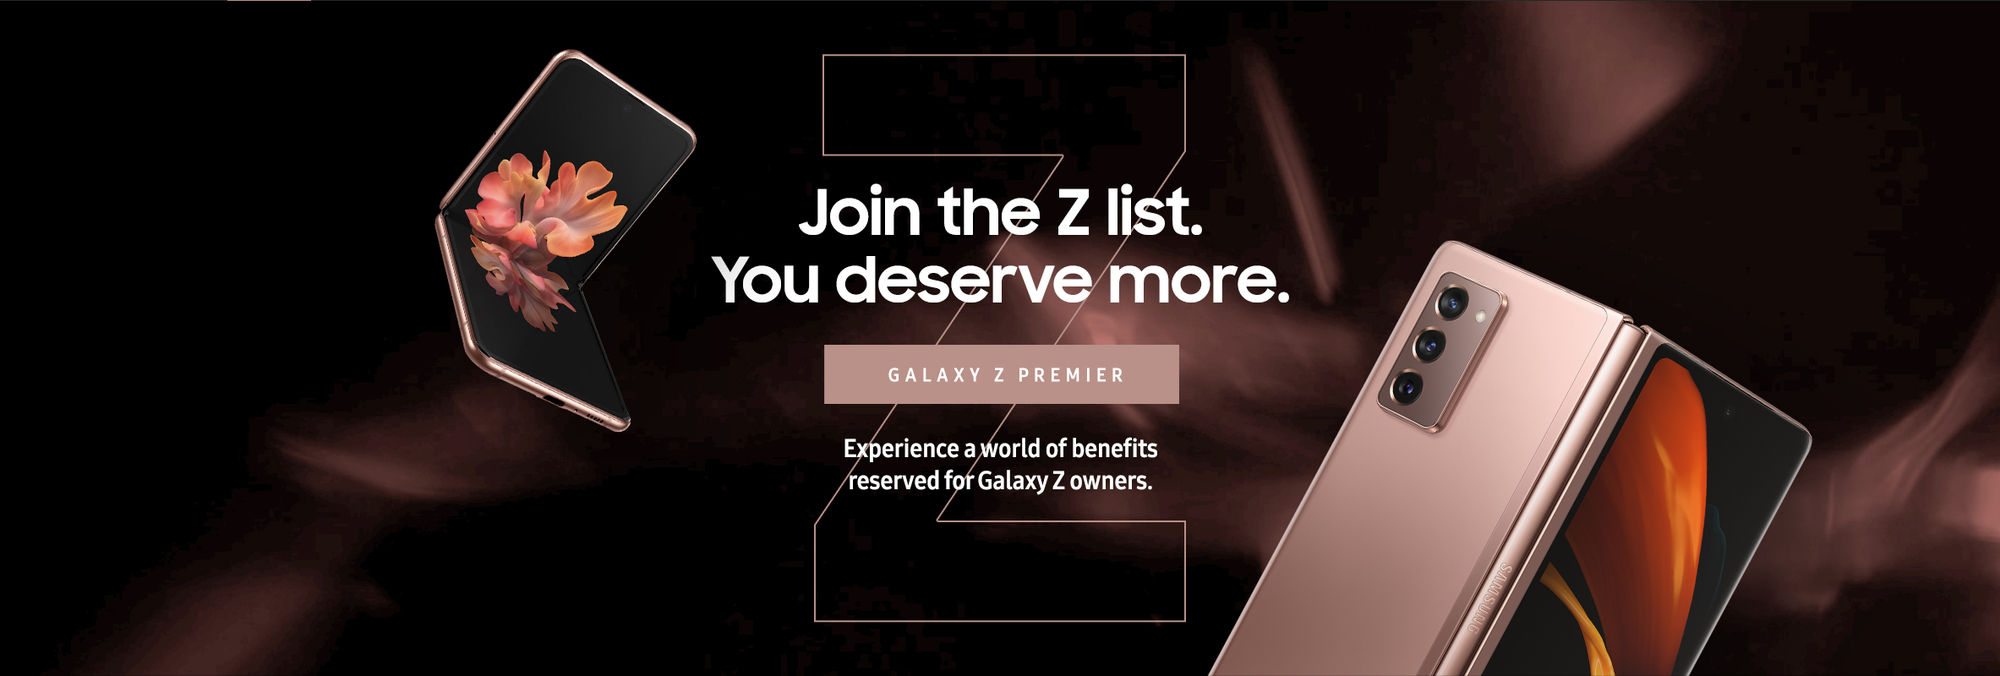 Introducing the Samsung Galaxy Z Fold2 smartphone GalaxyZFold.jpg